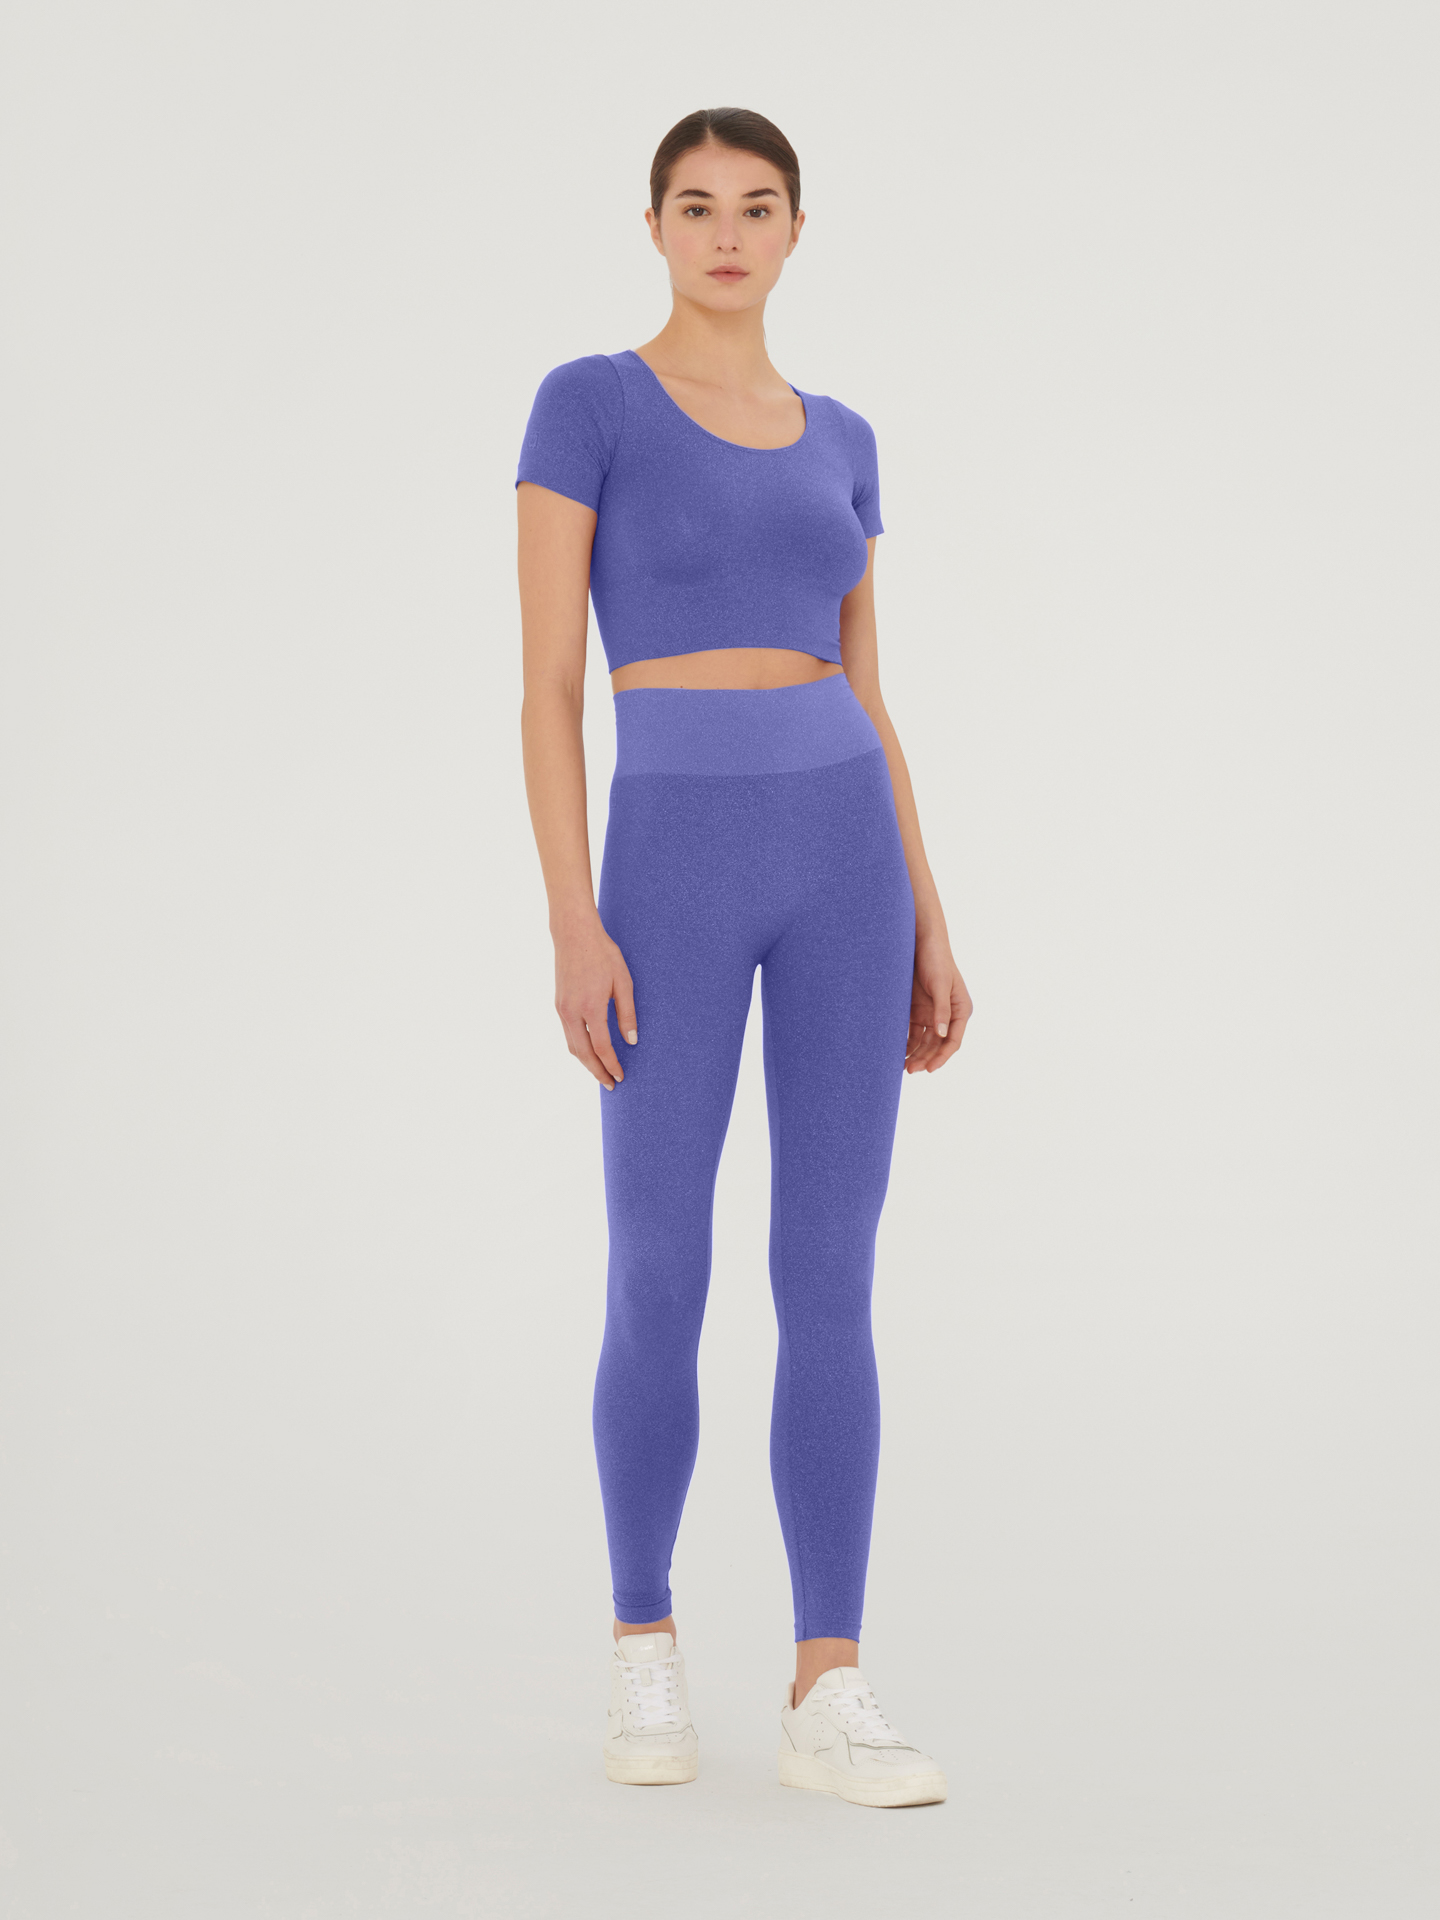 Wolford - Shiny Leggings, Frau, ultra violet/light aquamarine, Größe: S von Wolford